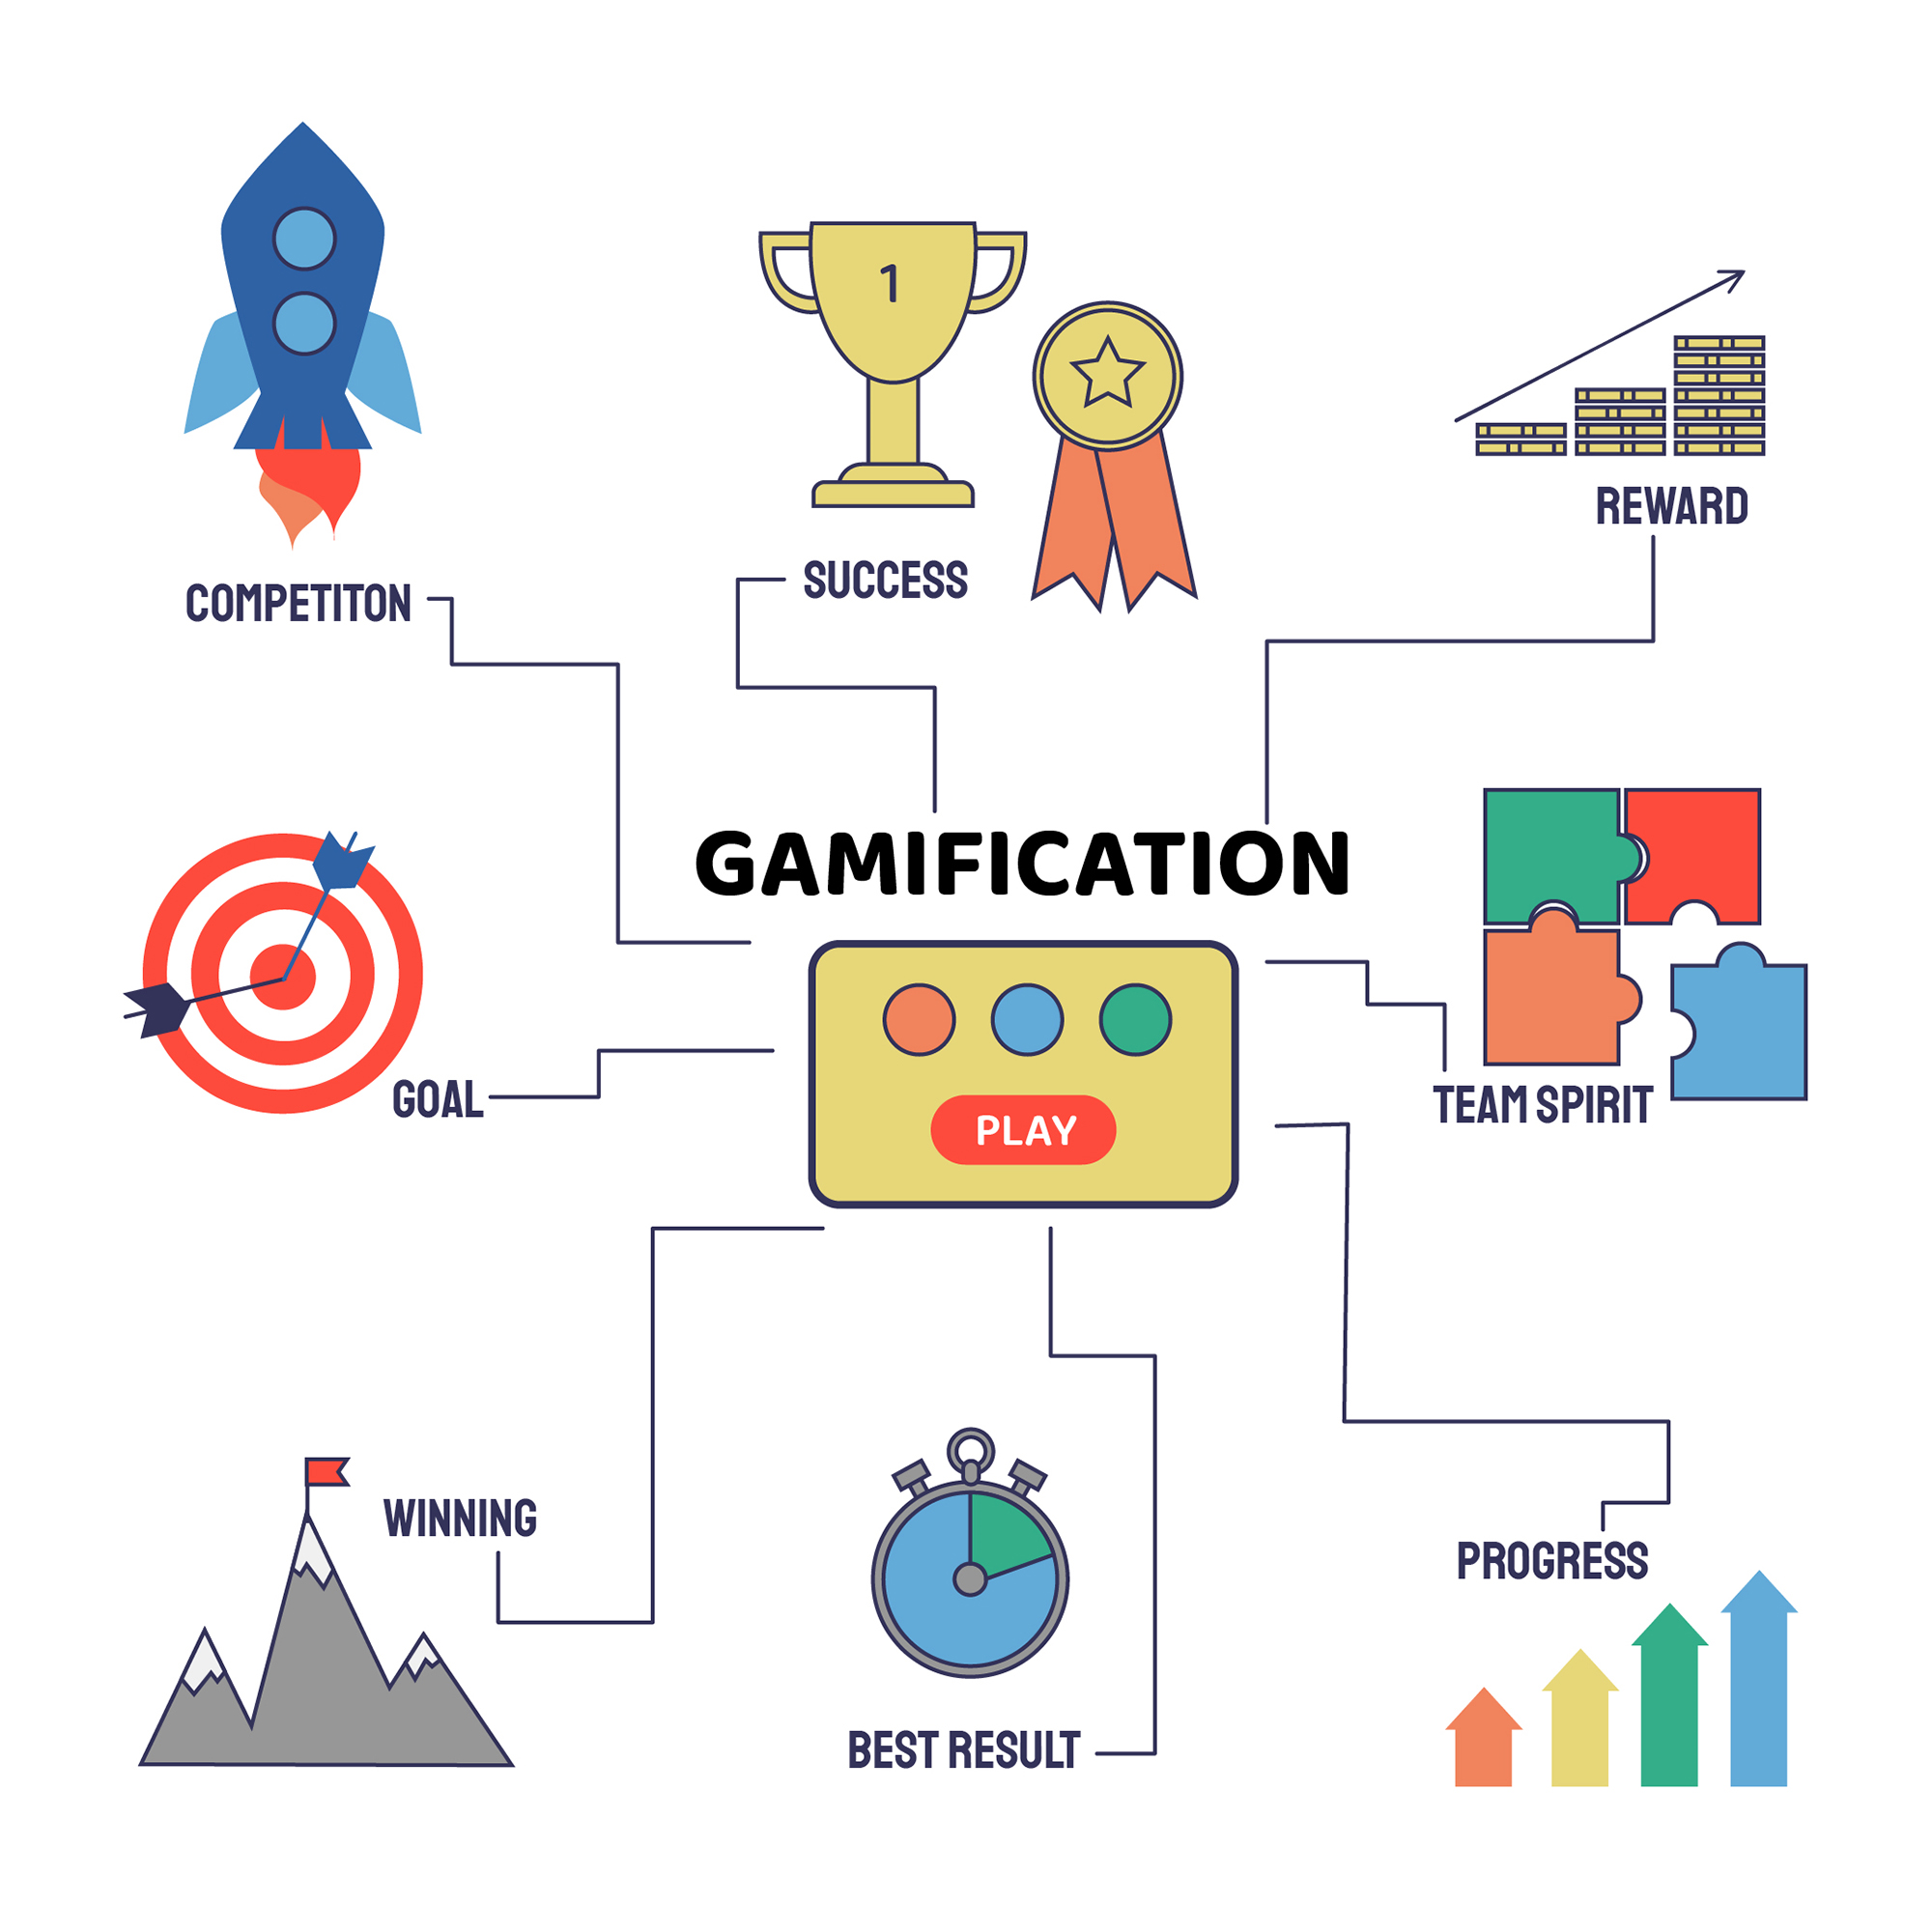 creative gamification illustration